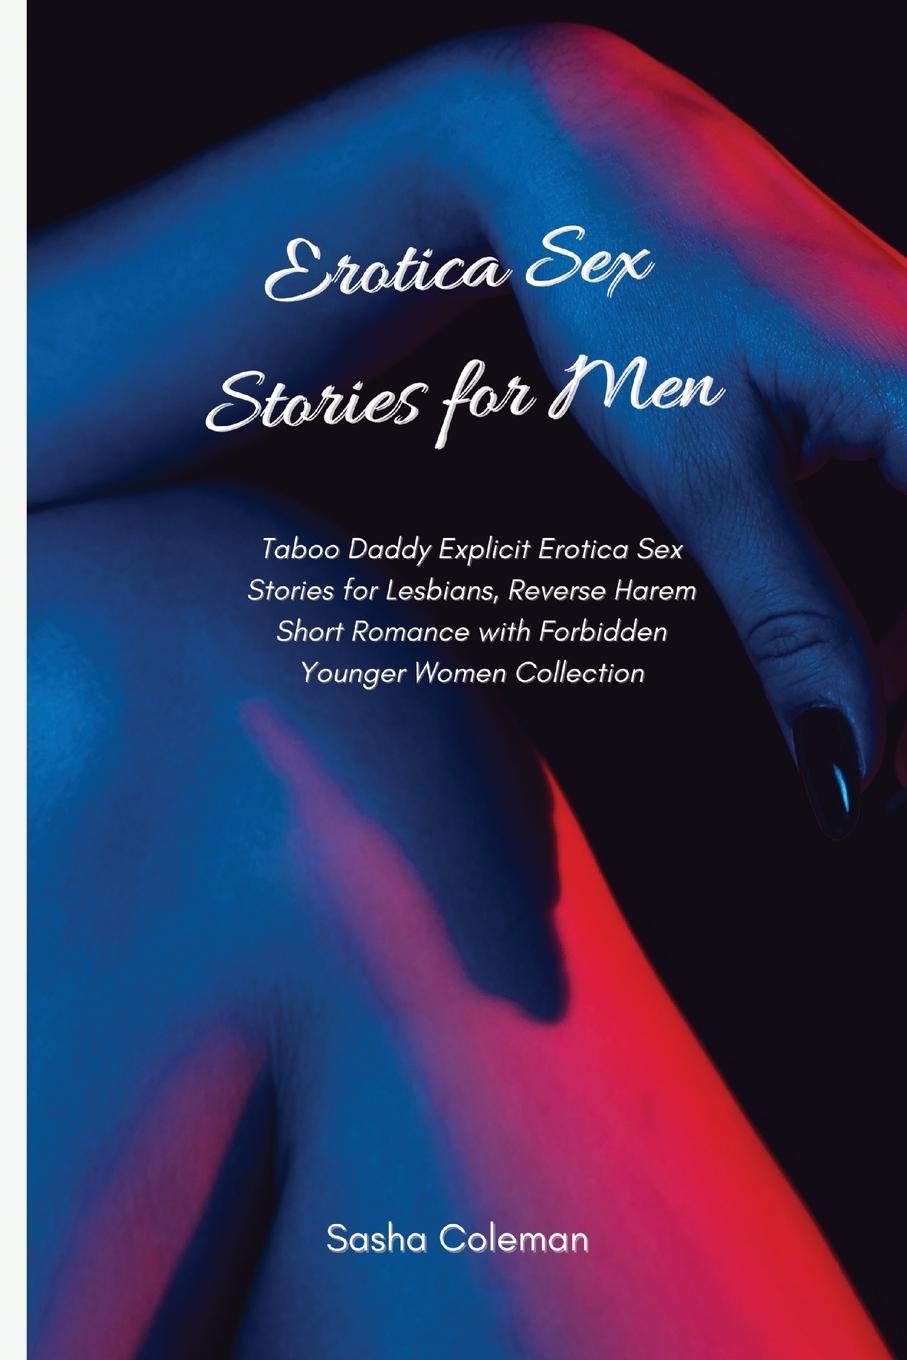 Книга Erotica Sex Stories for Men 